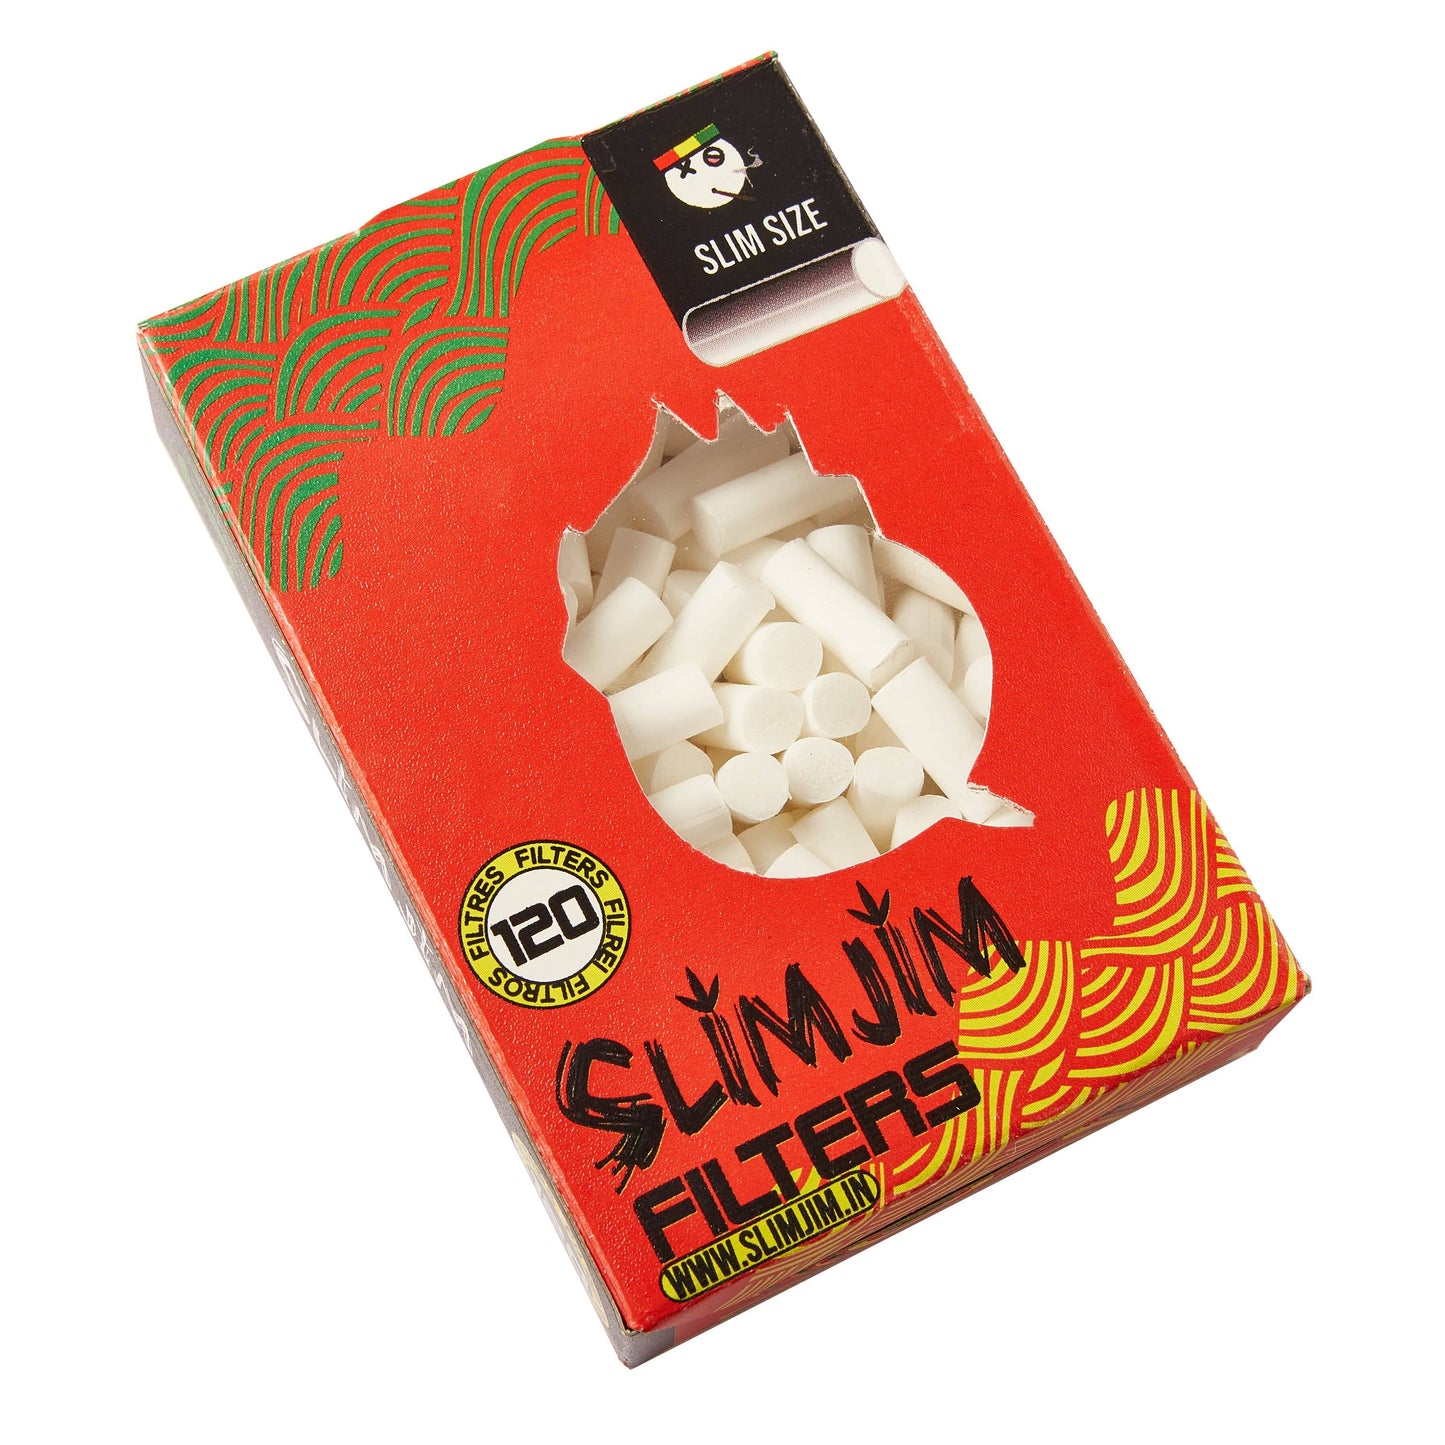 Slimjim Filters (15 X 6 MM) (Box of 5)